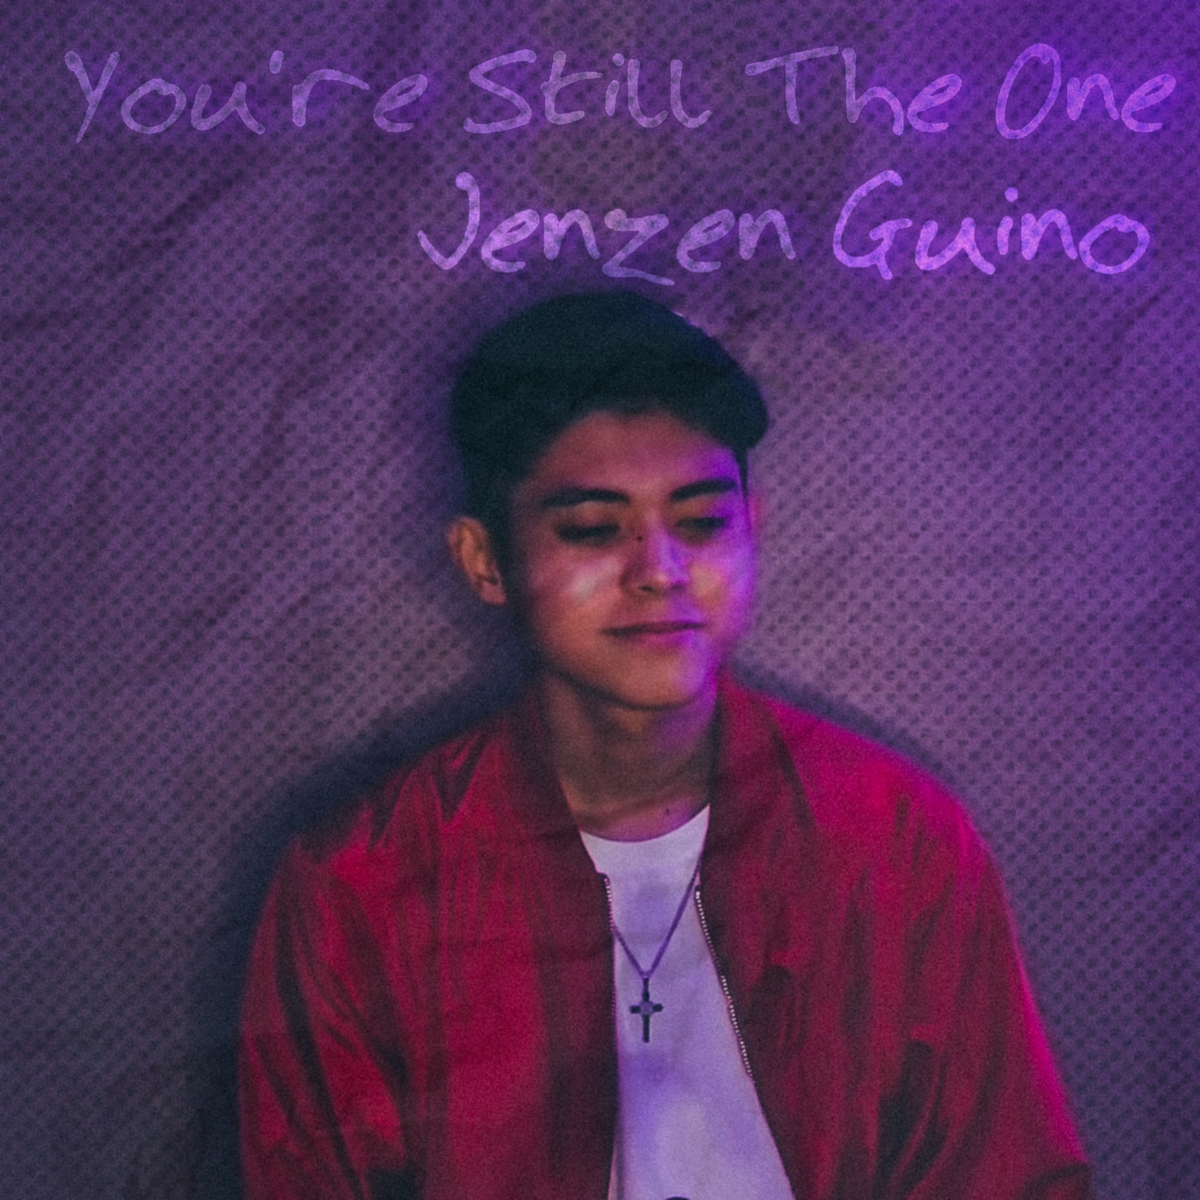 Jenzen Guino - You're Still The One - 2021